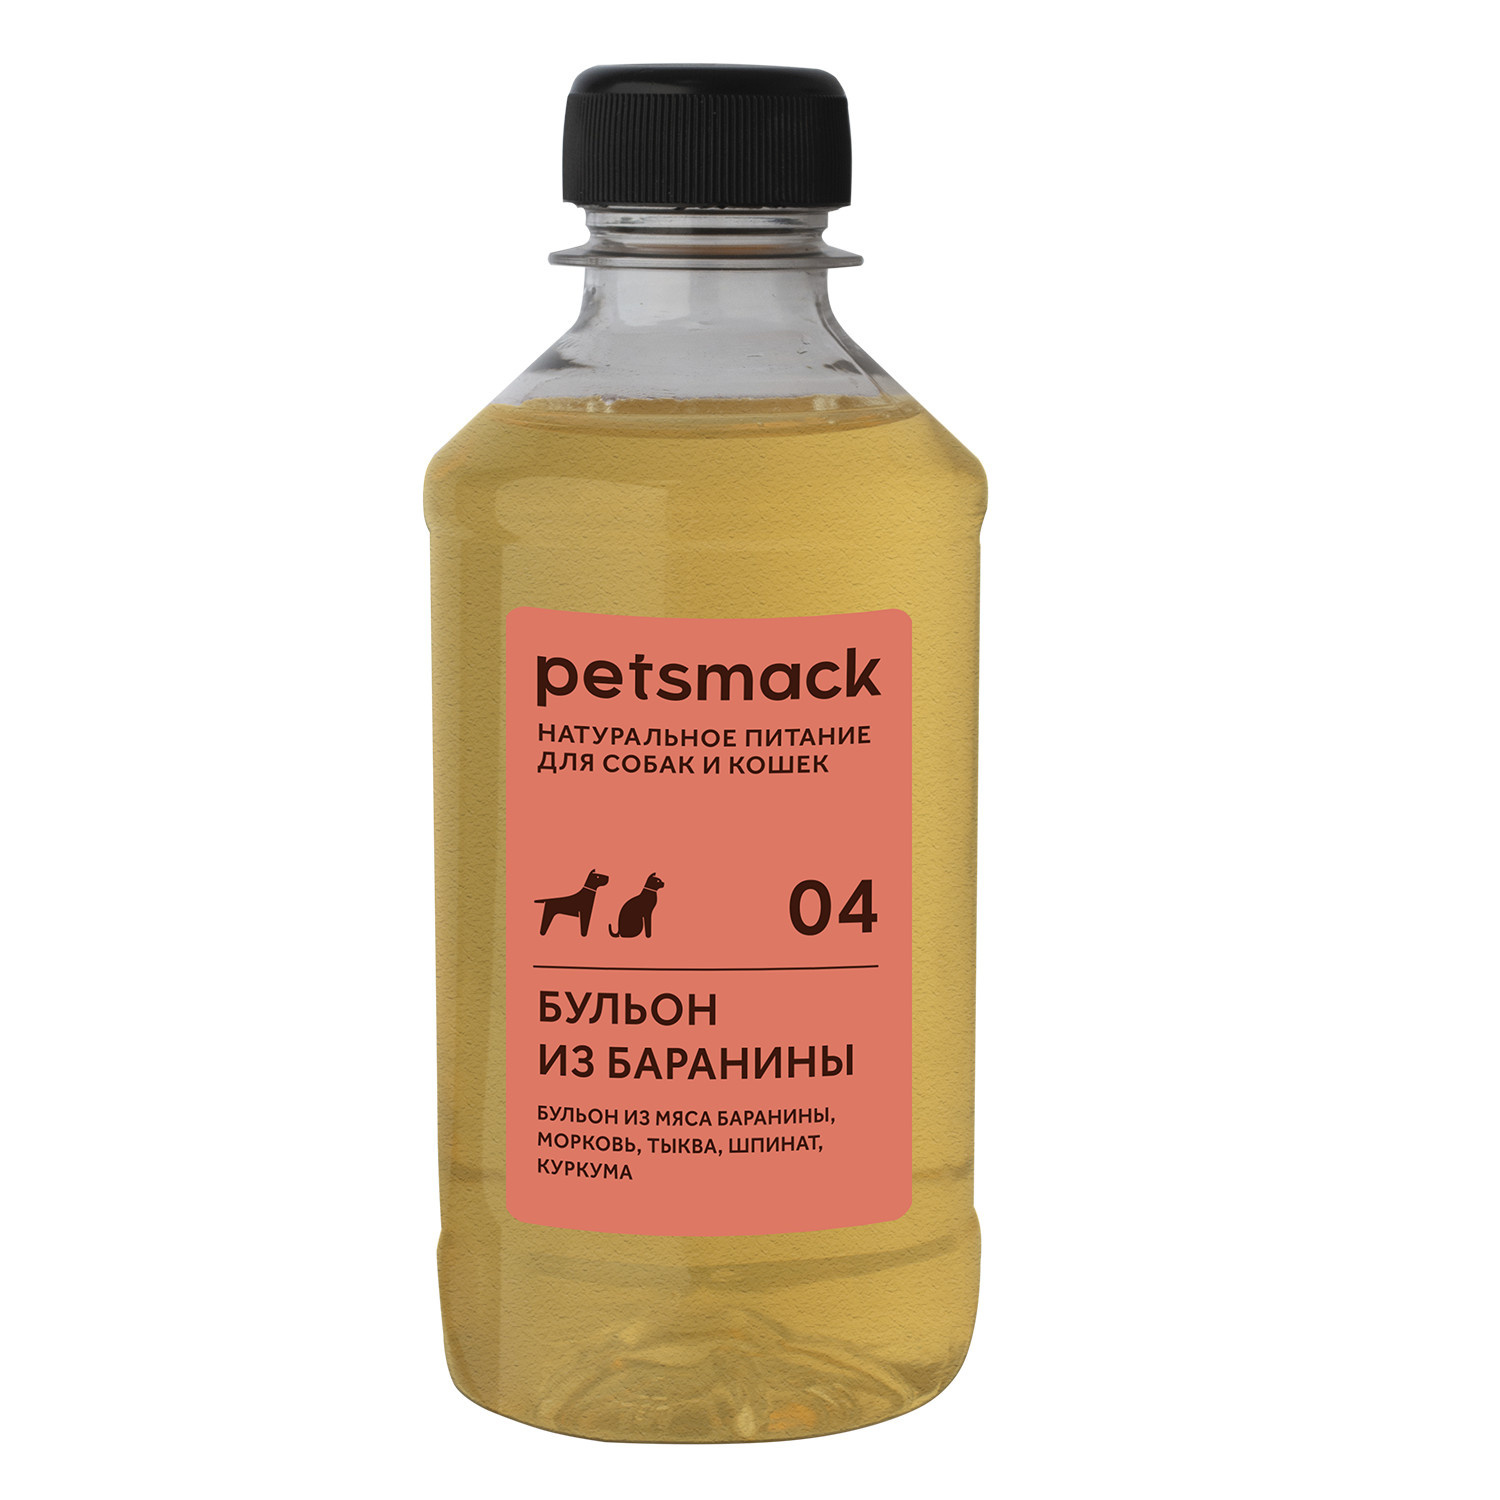 Petsmack Petsmack бульон из баранины (260 г)